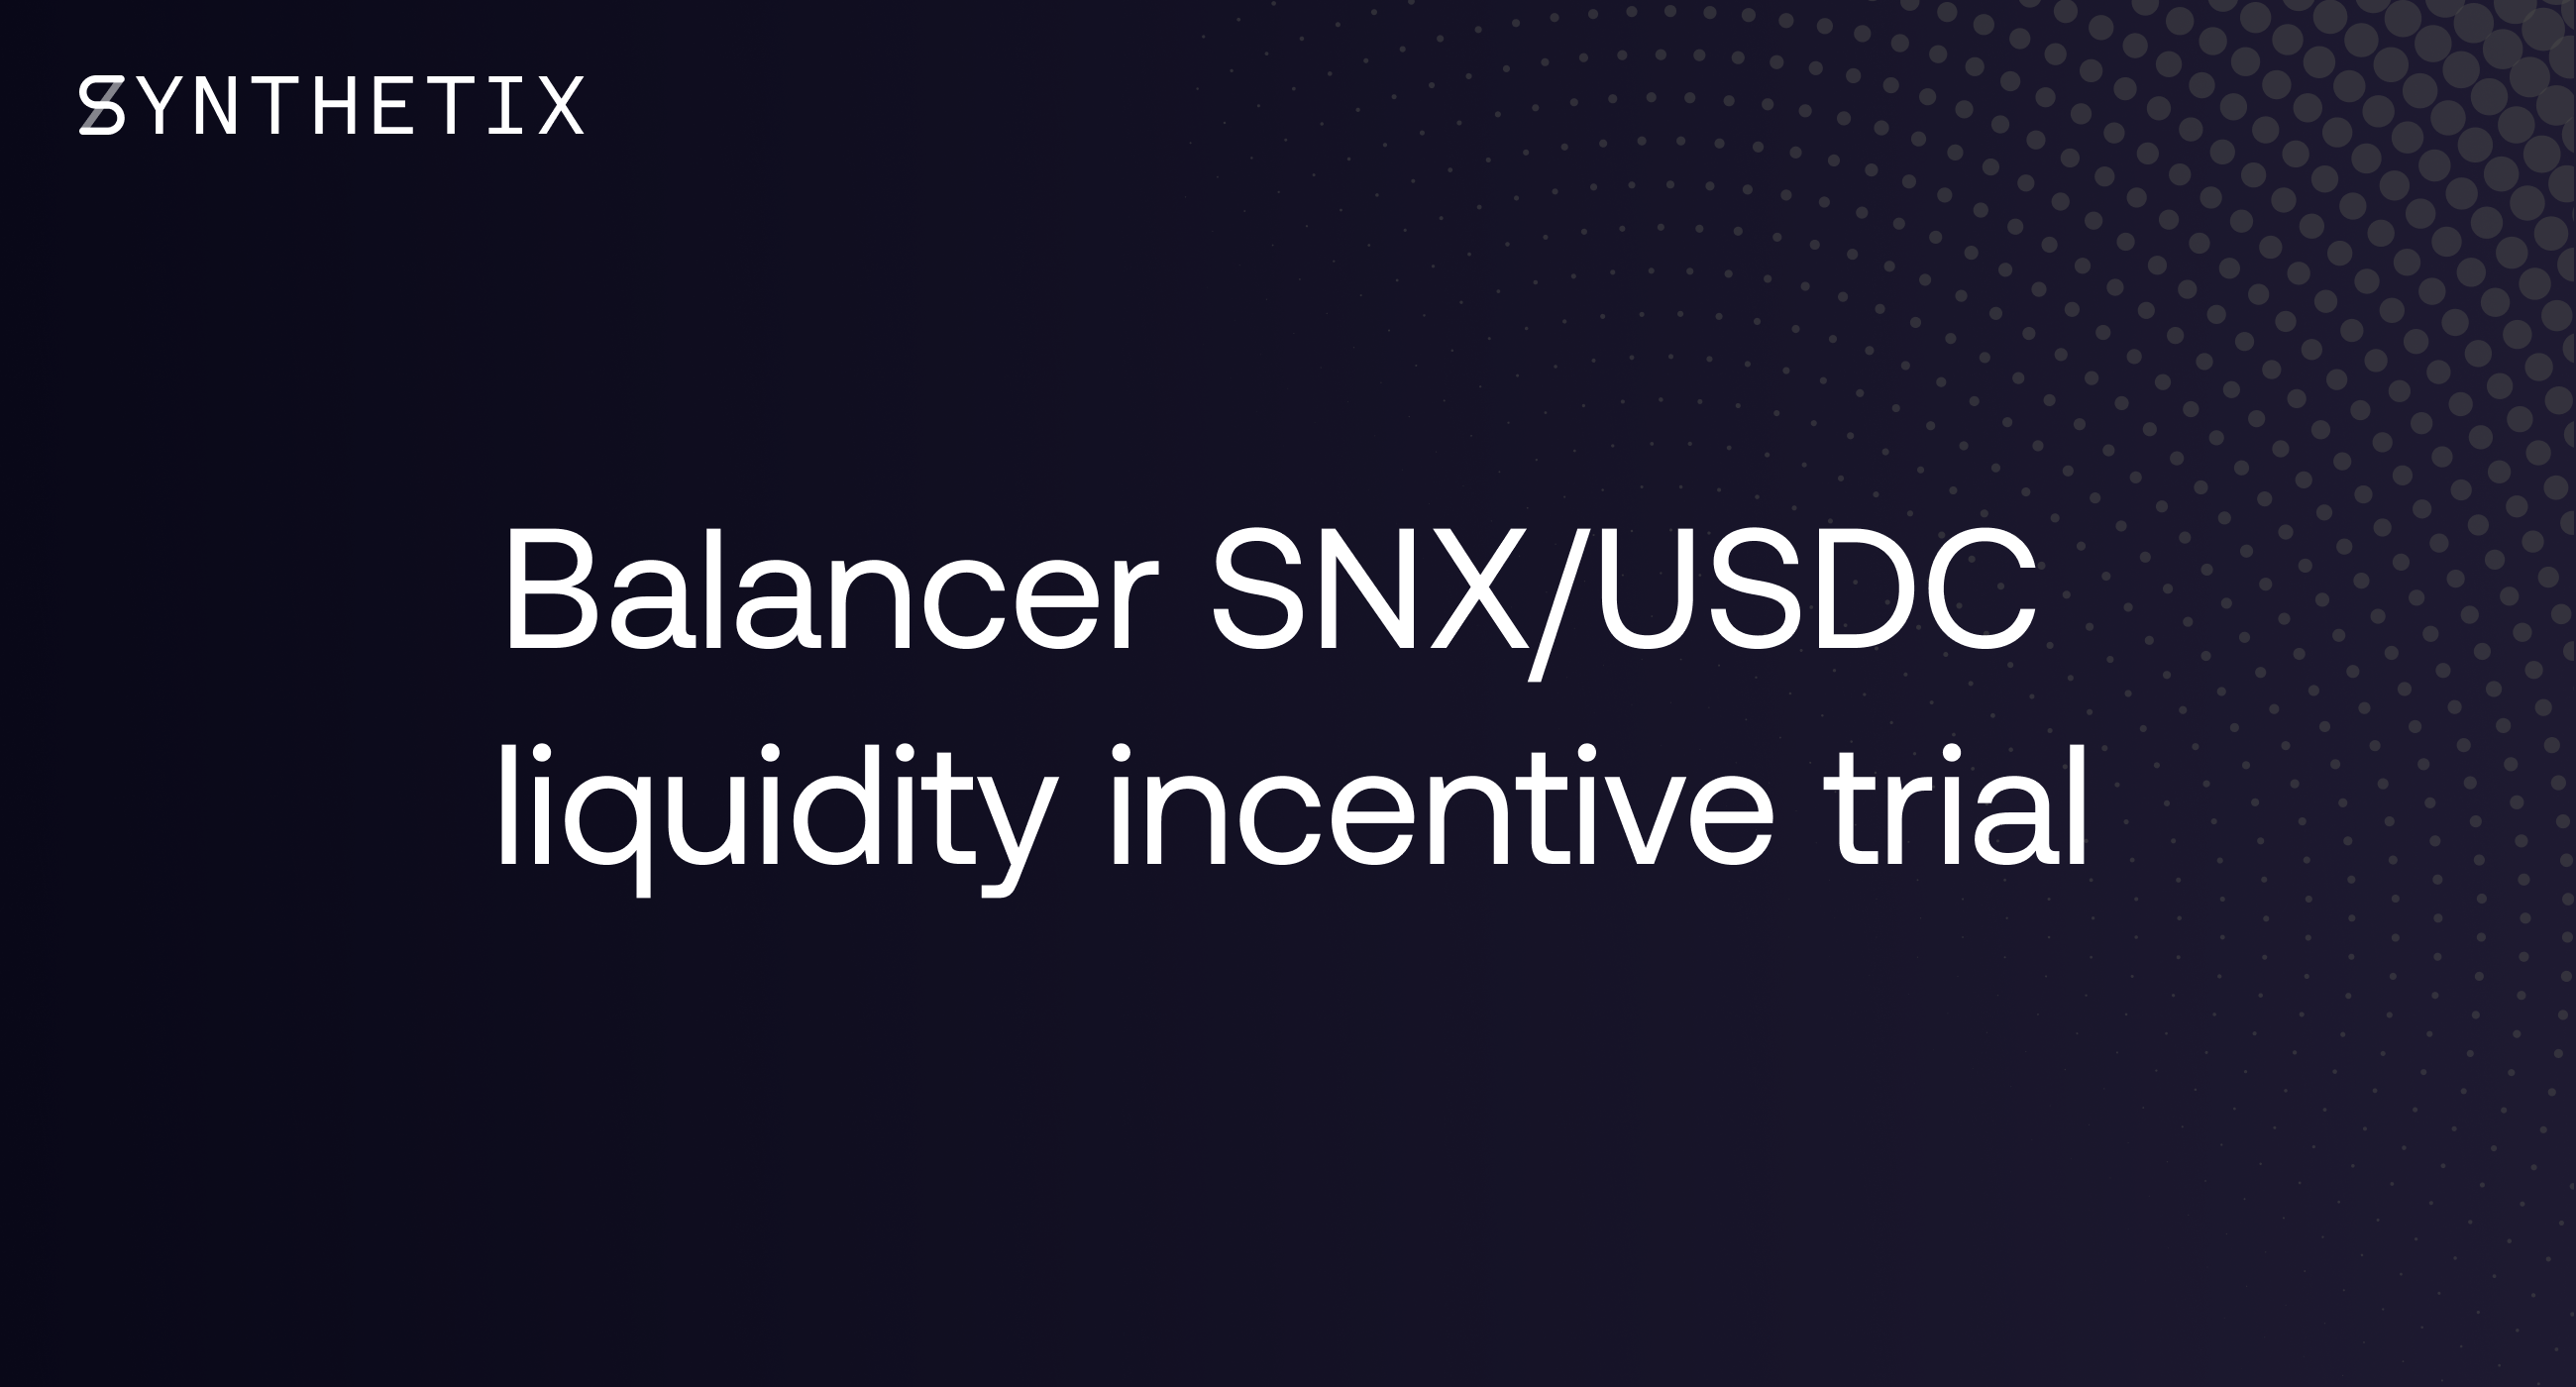 Balancer SNX/USDC liquidity trial